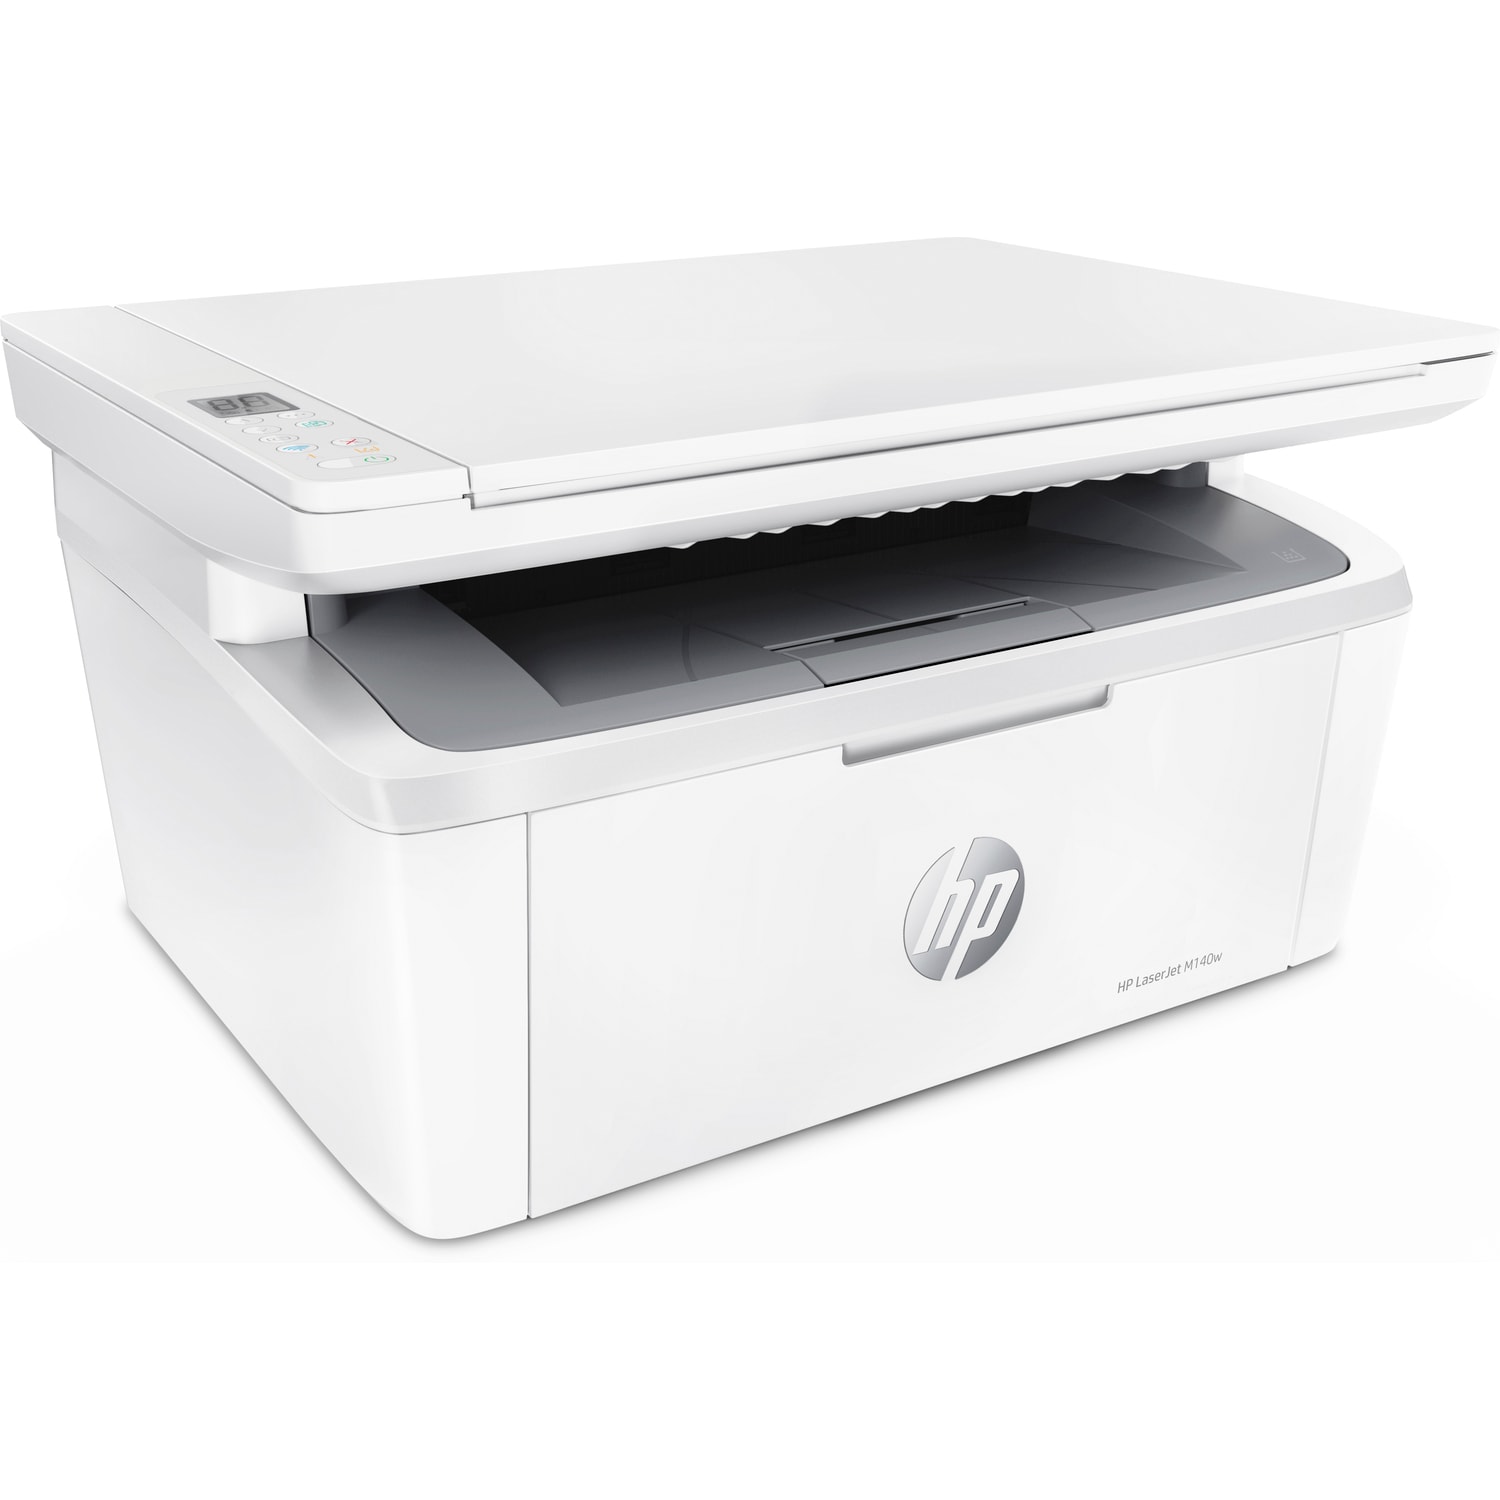 HP LaserJet MFP M140w Laser Printer, Black And White Mobile Print, Copy,  Scan Up